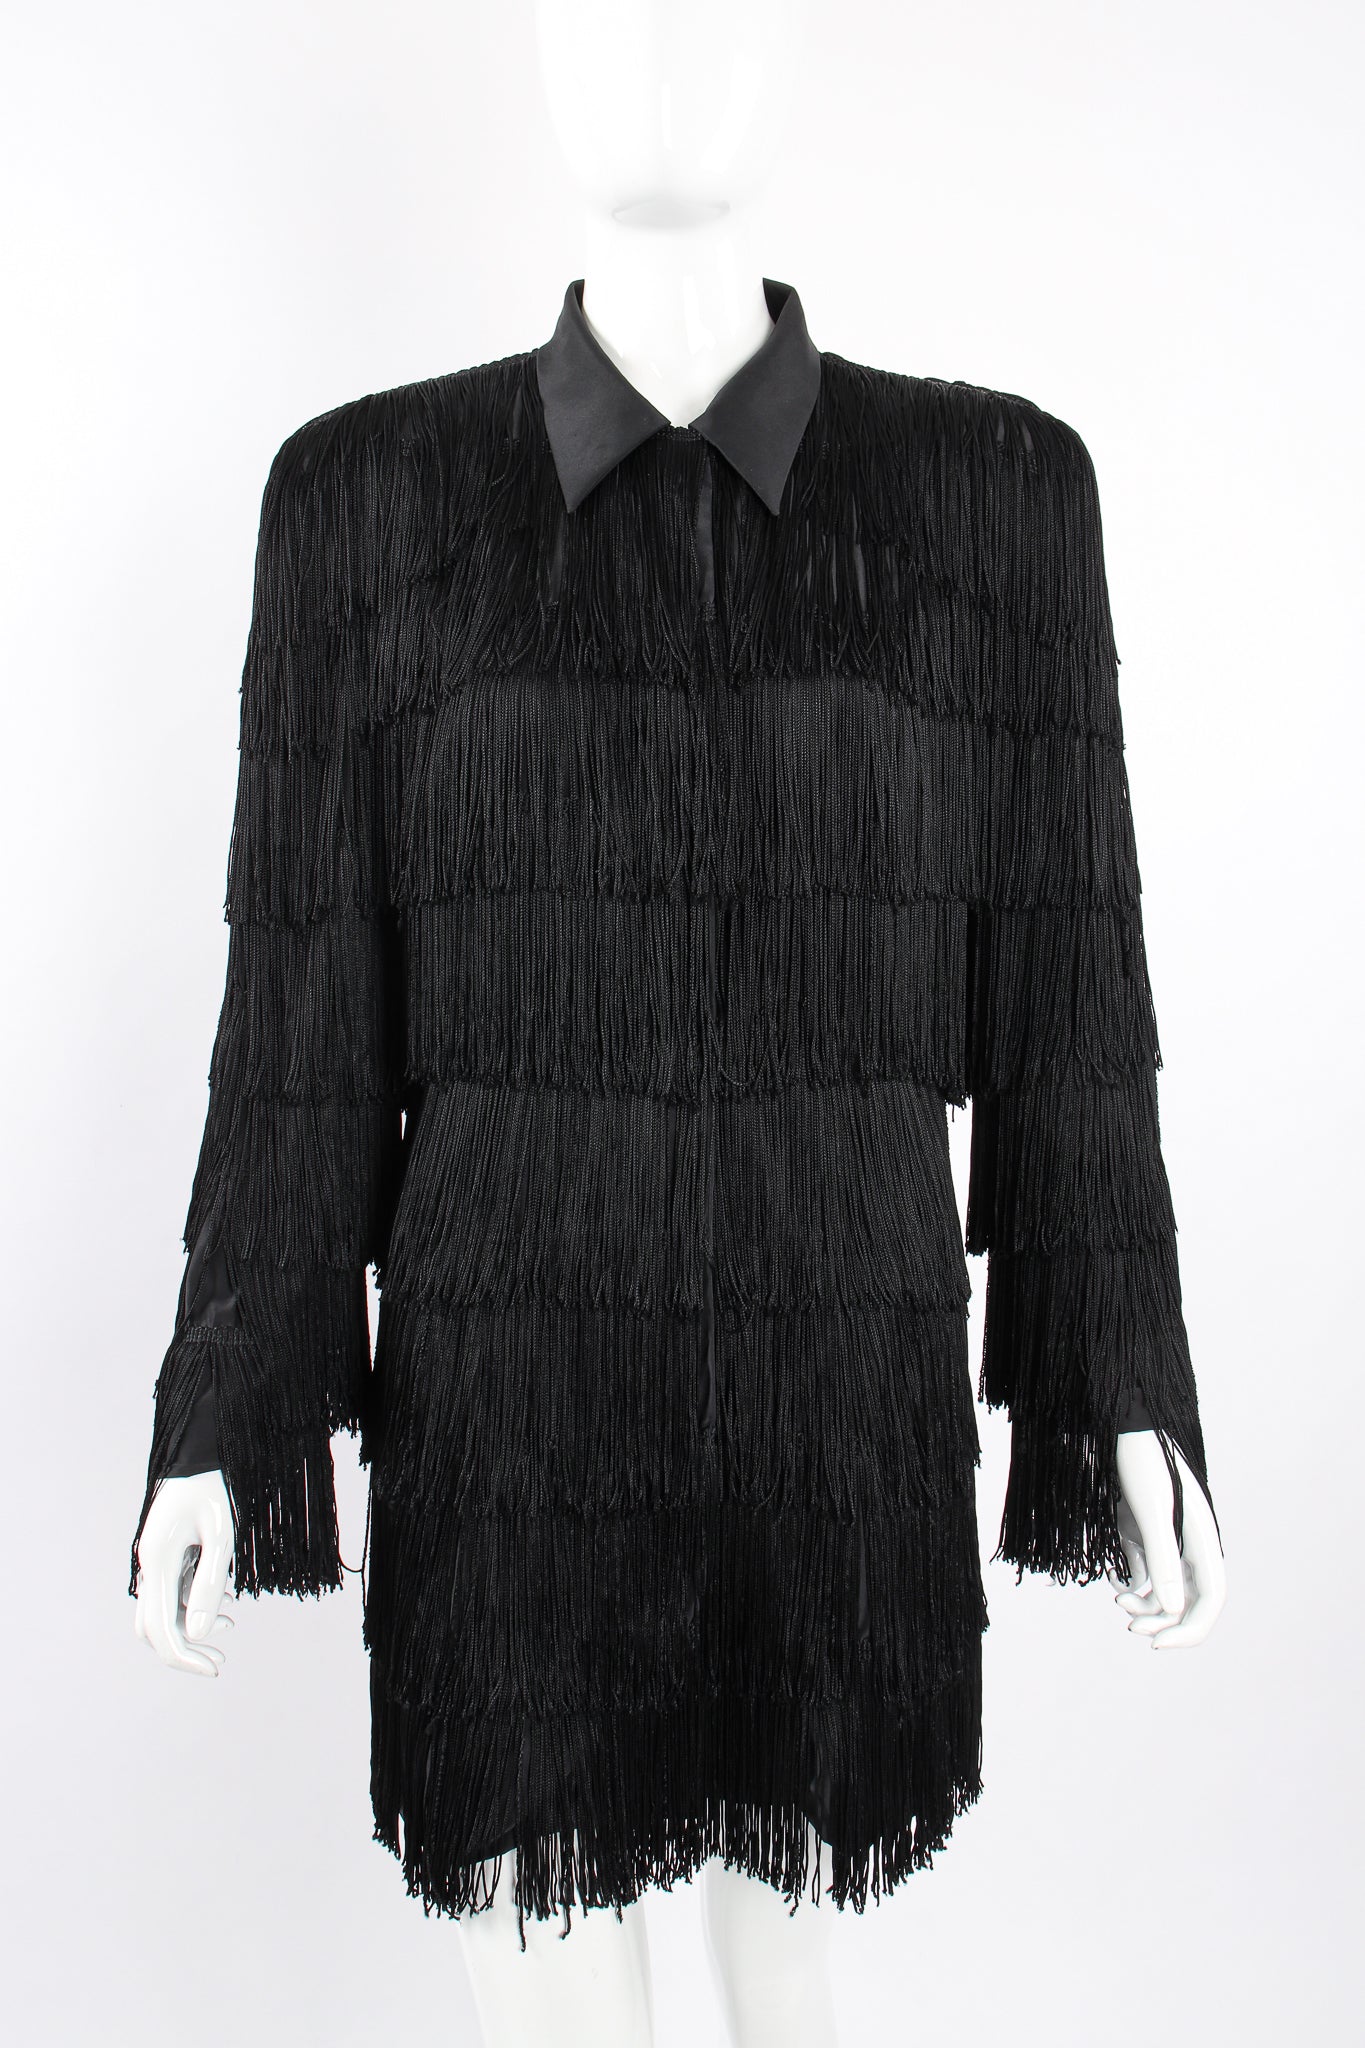 Vintage OMO Norma Kamali Fringed Shirt Dress Jacket on Mannequin front crop at Recess Los Angeles